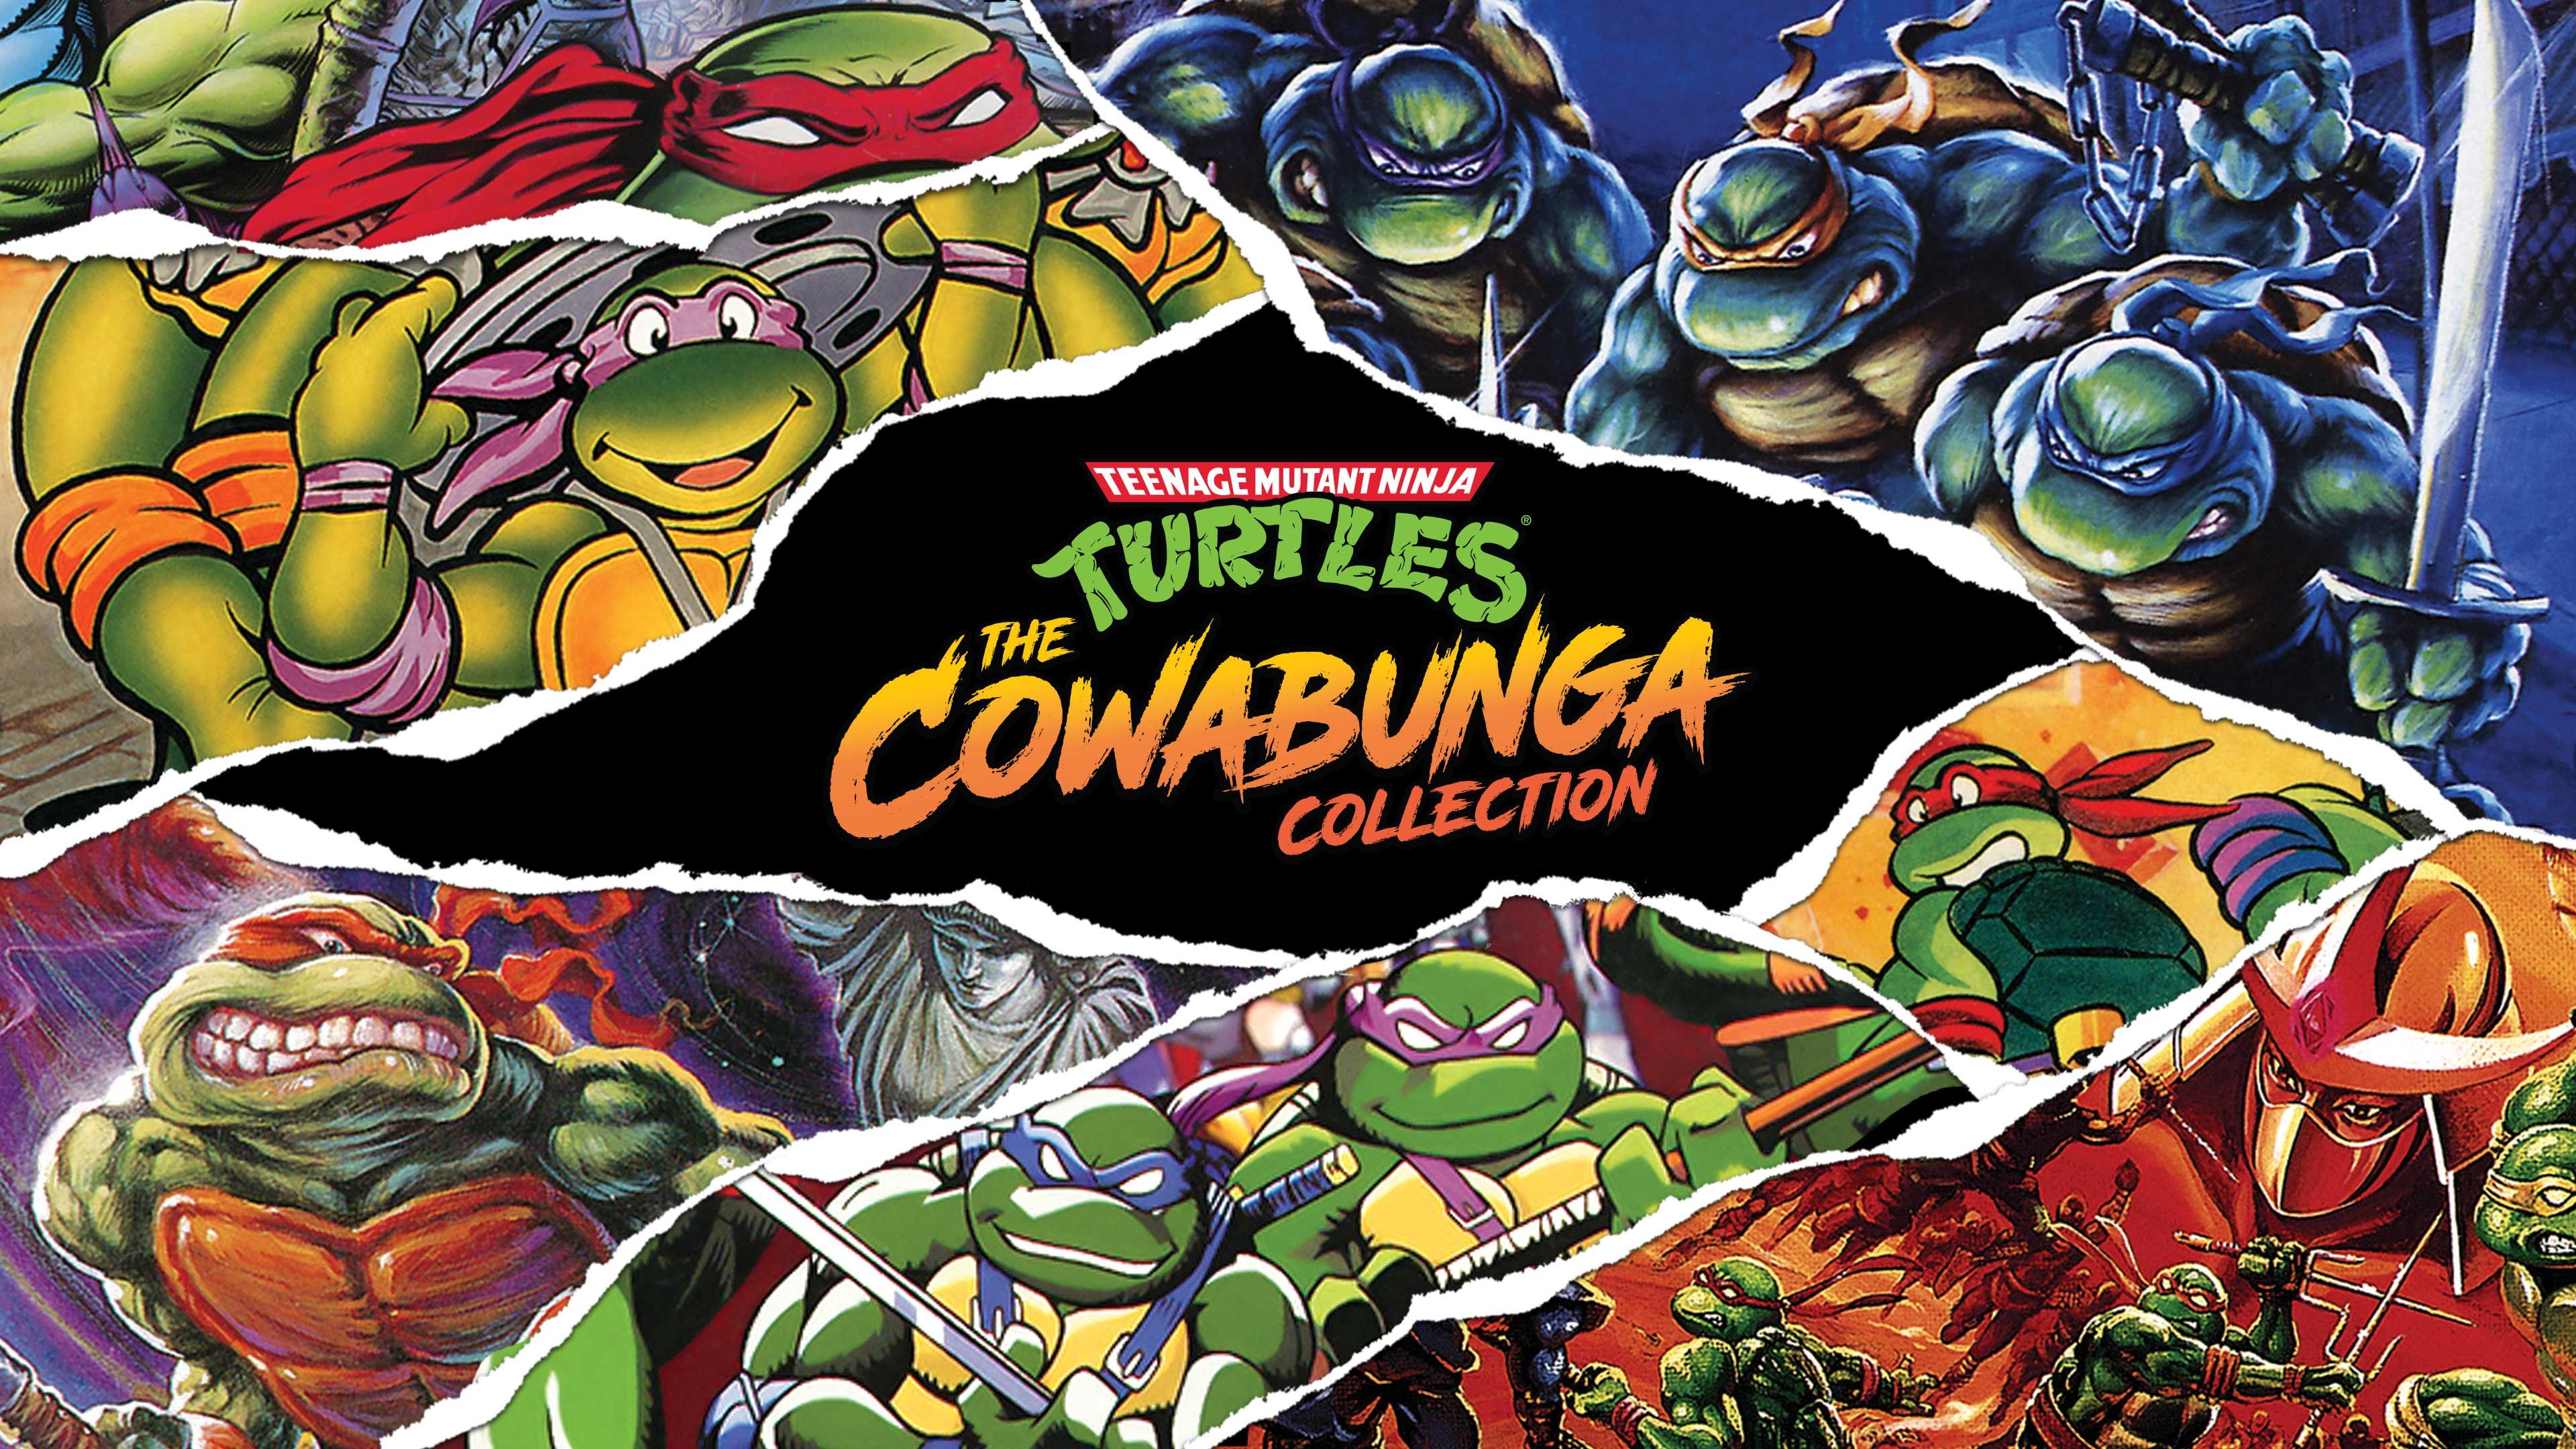 Teenage Mutant Ninja Turtles Cowabunga Collection cover image